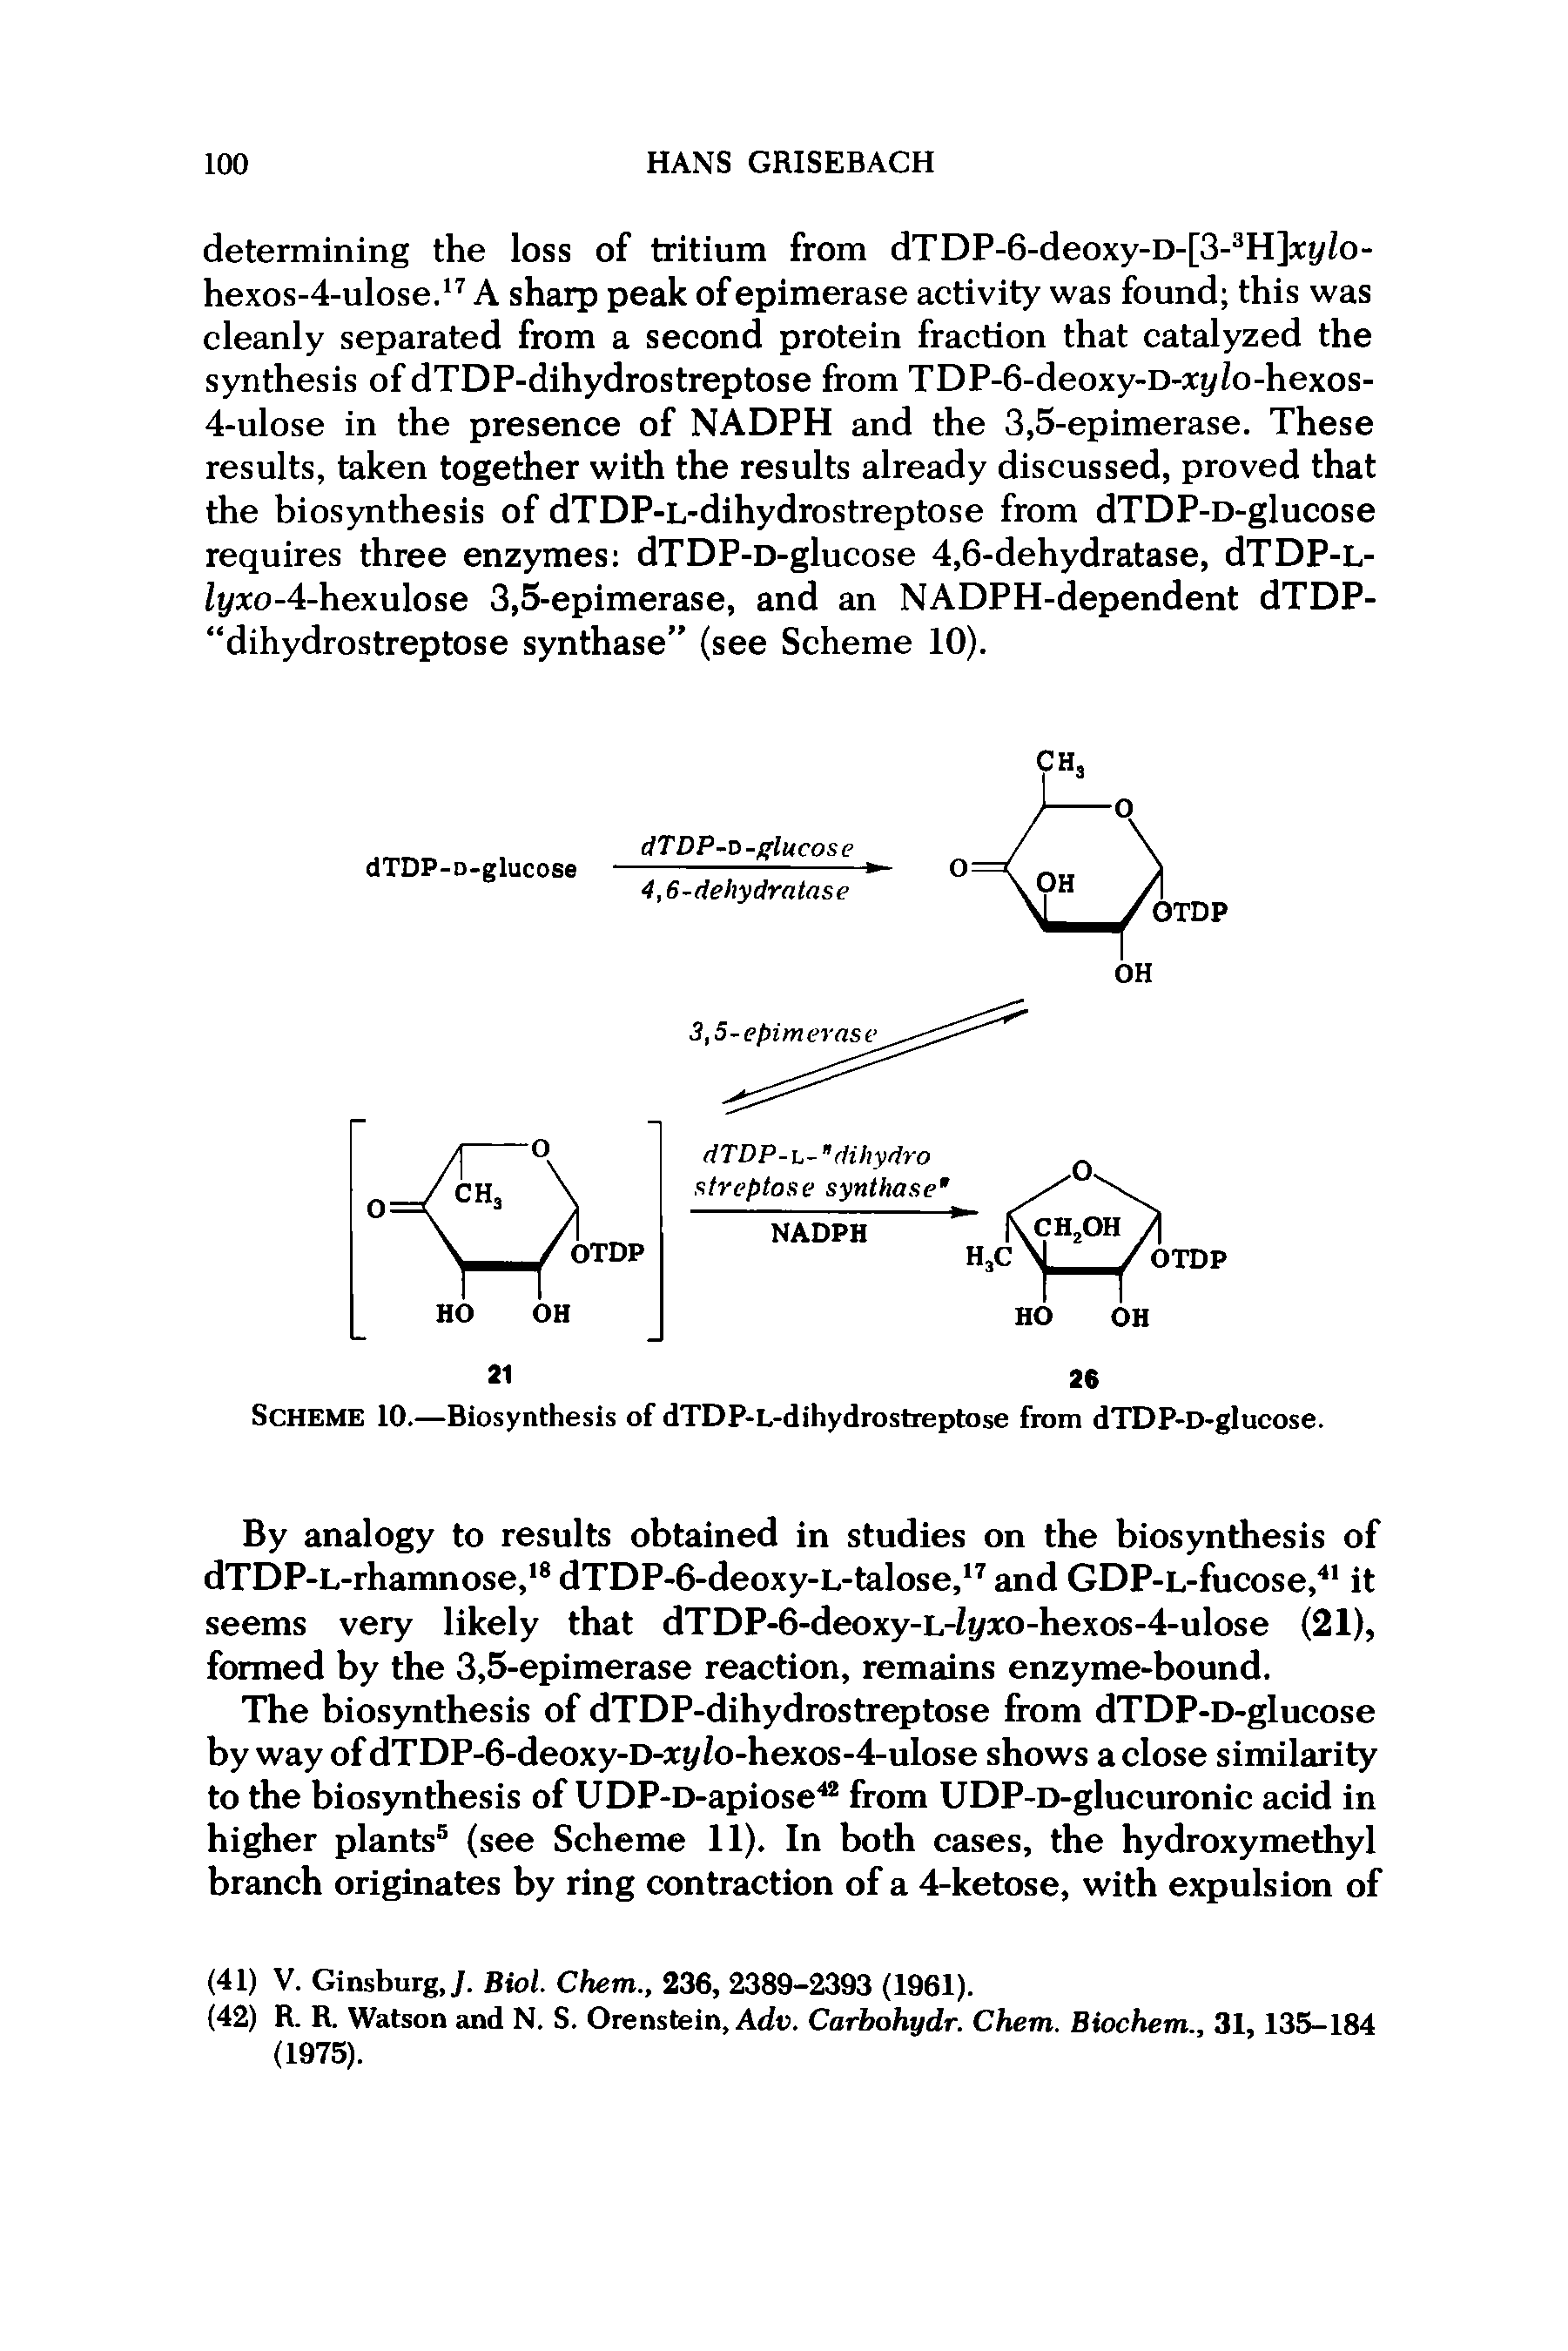 Scheme 10.—Biosynthesis of dTDP-L-dihydrostreptose from dTDP-D-glucose.